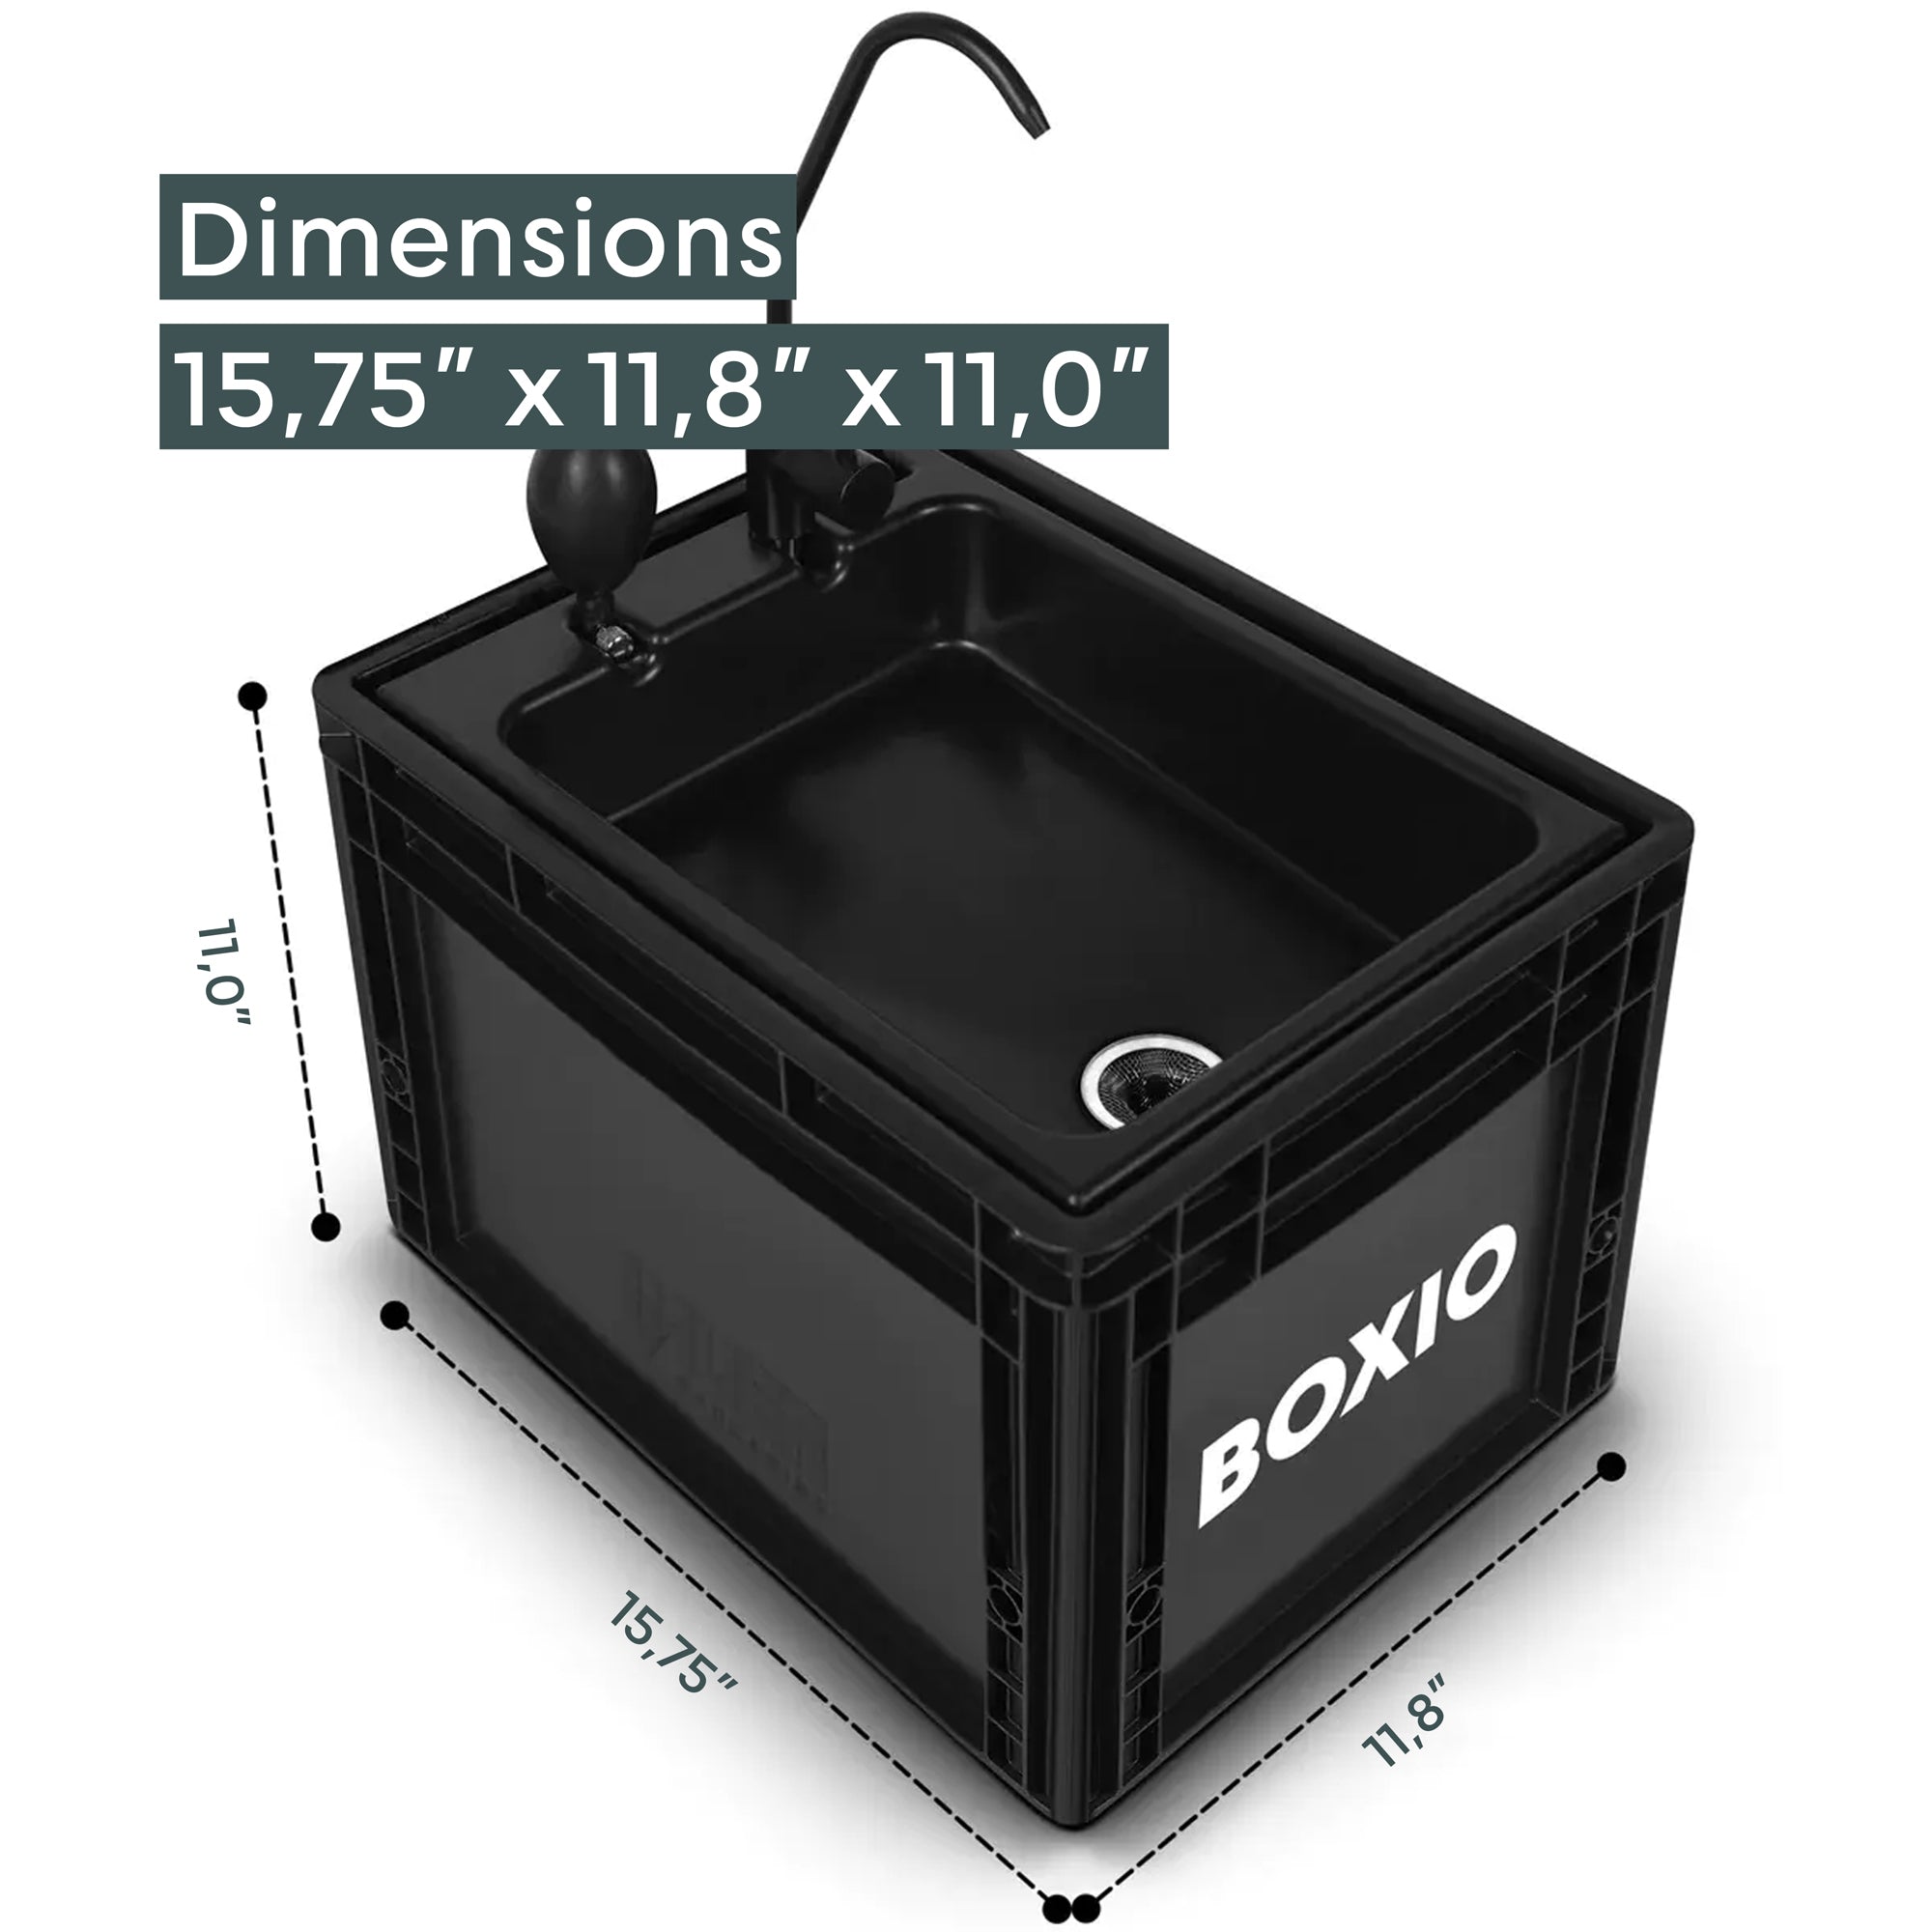 BOXIO - WASH: Your portable sink